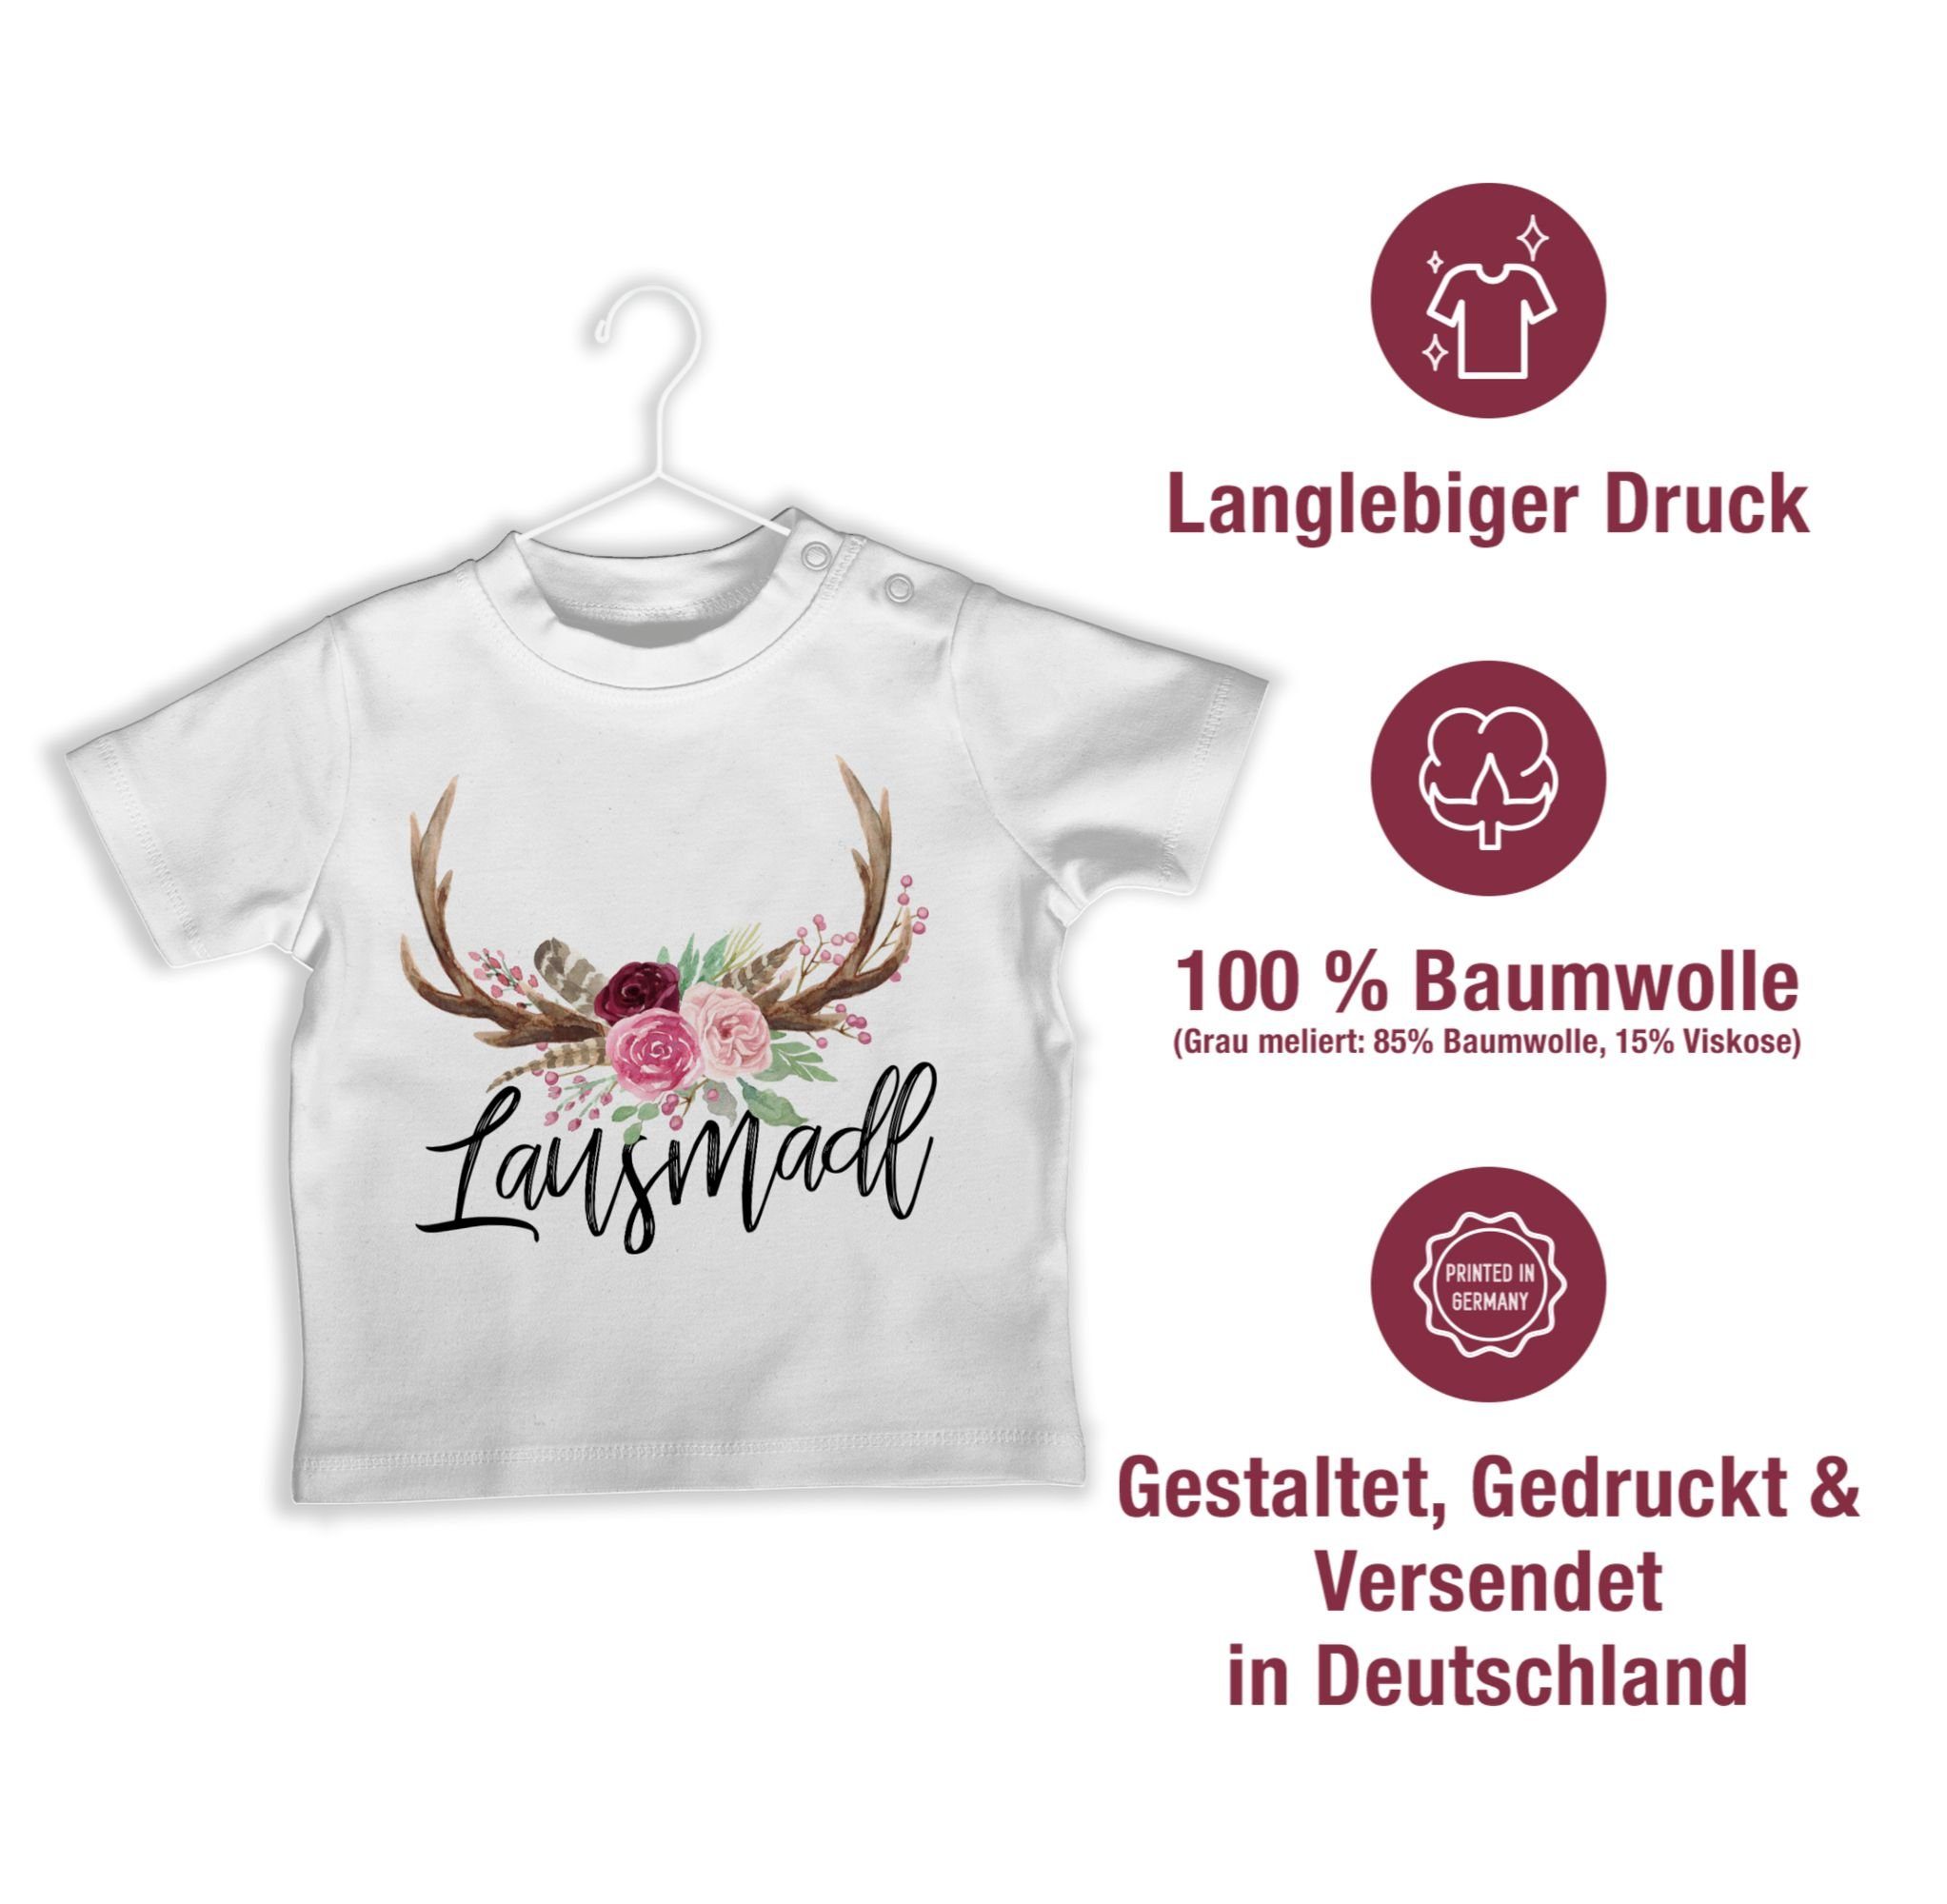 Oktoberfest Hirschgeweih Weiß T-Shirt Lausmadl Shirtracer für Mode Outfit Baby 1